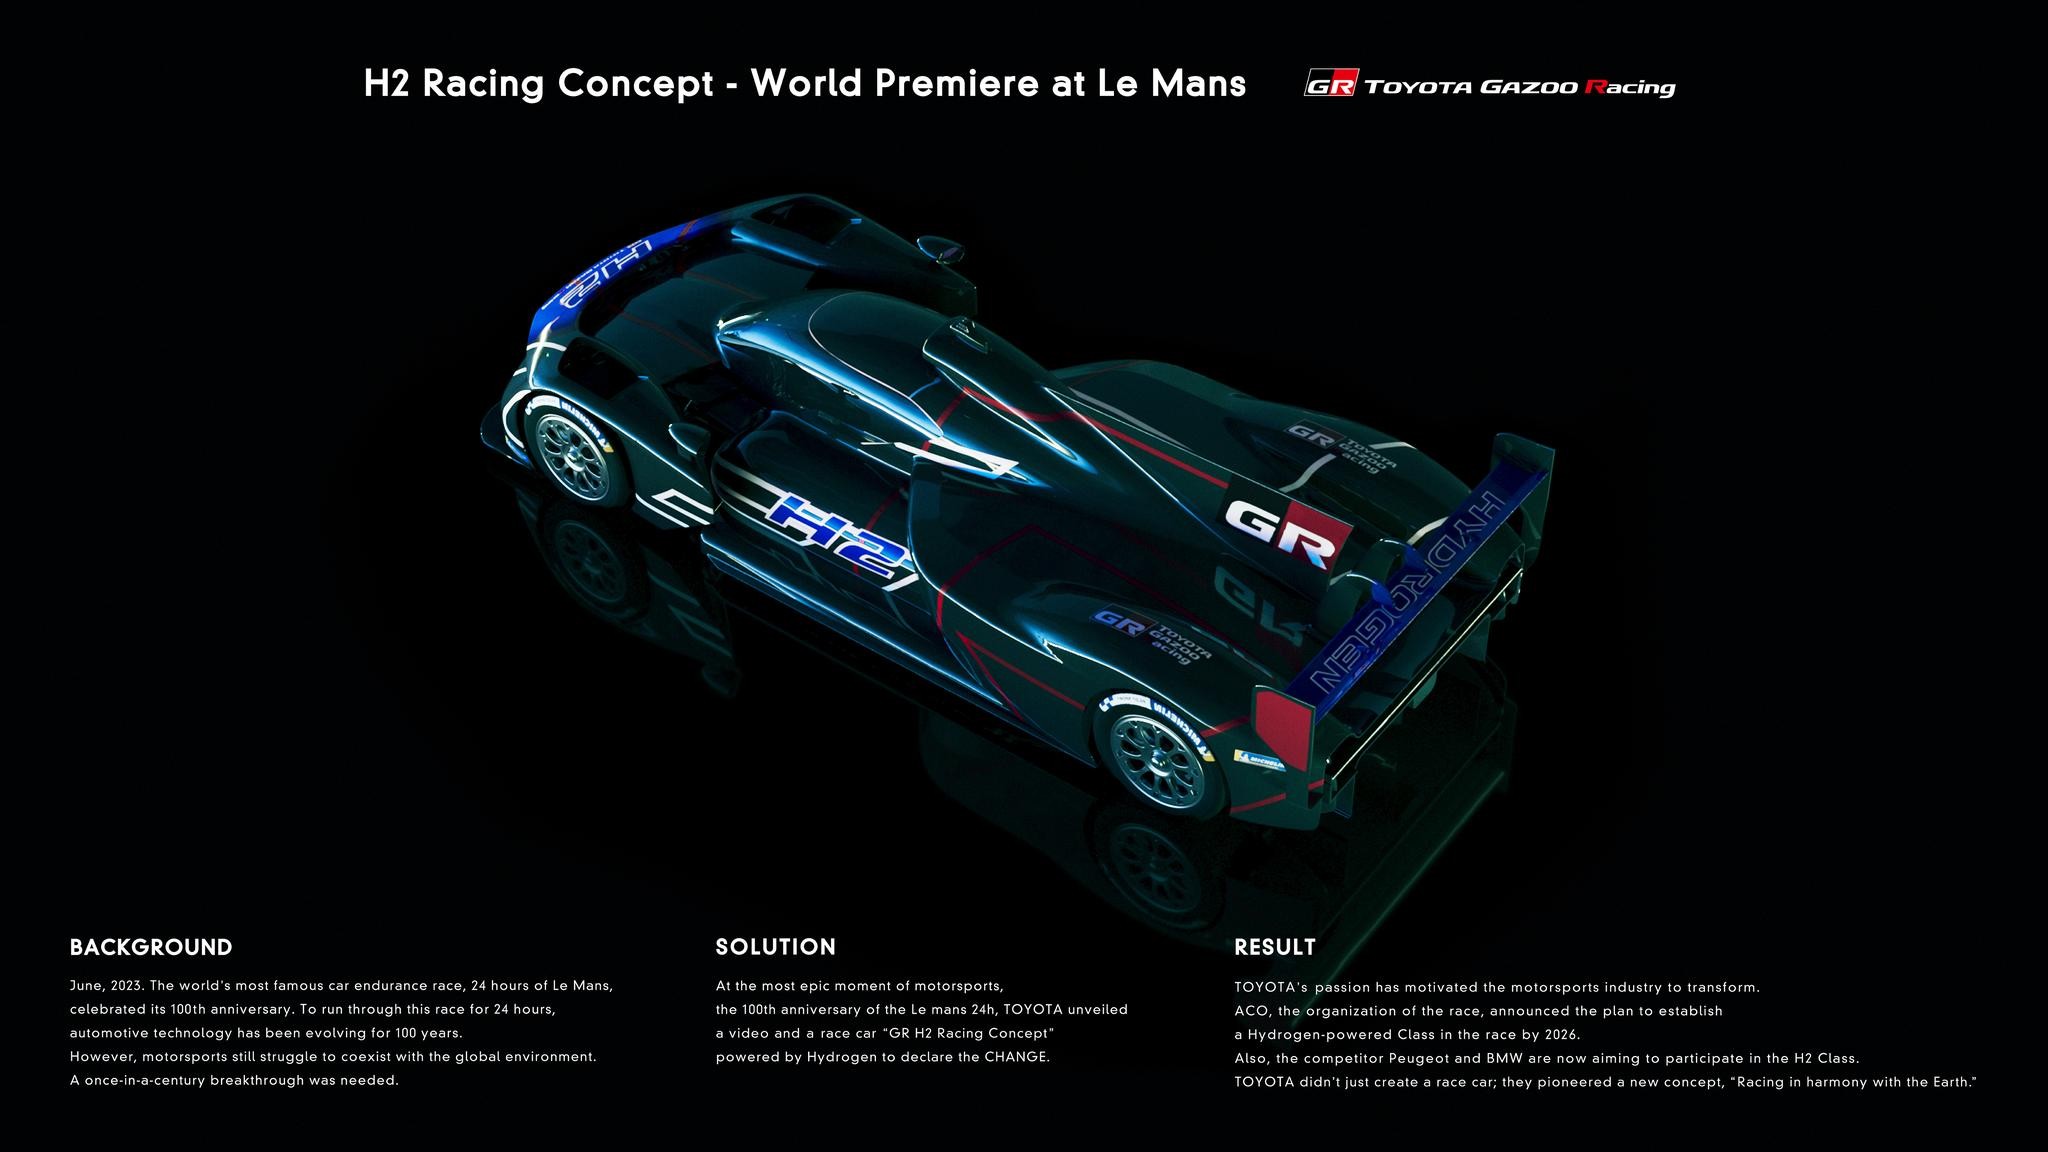 H2 Racing Concept - World Premiere at Le Mans